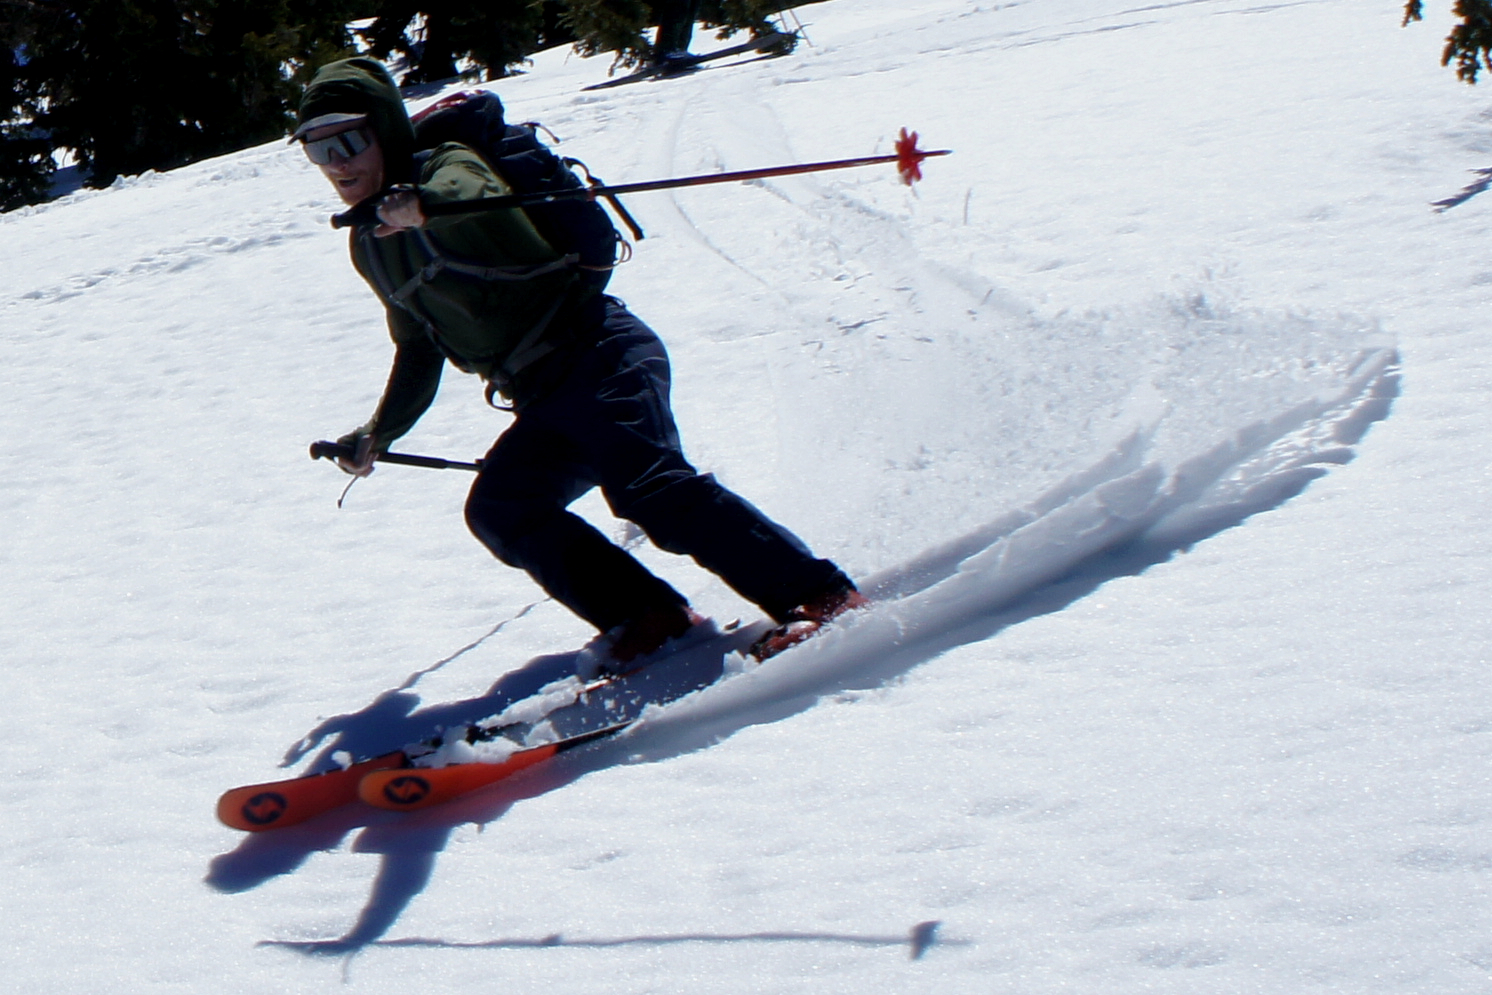 skier throwing up wave of slush in bright sunshine